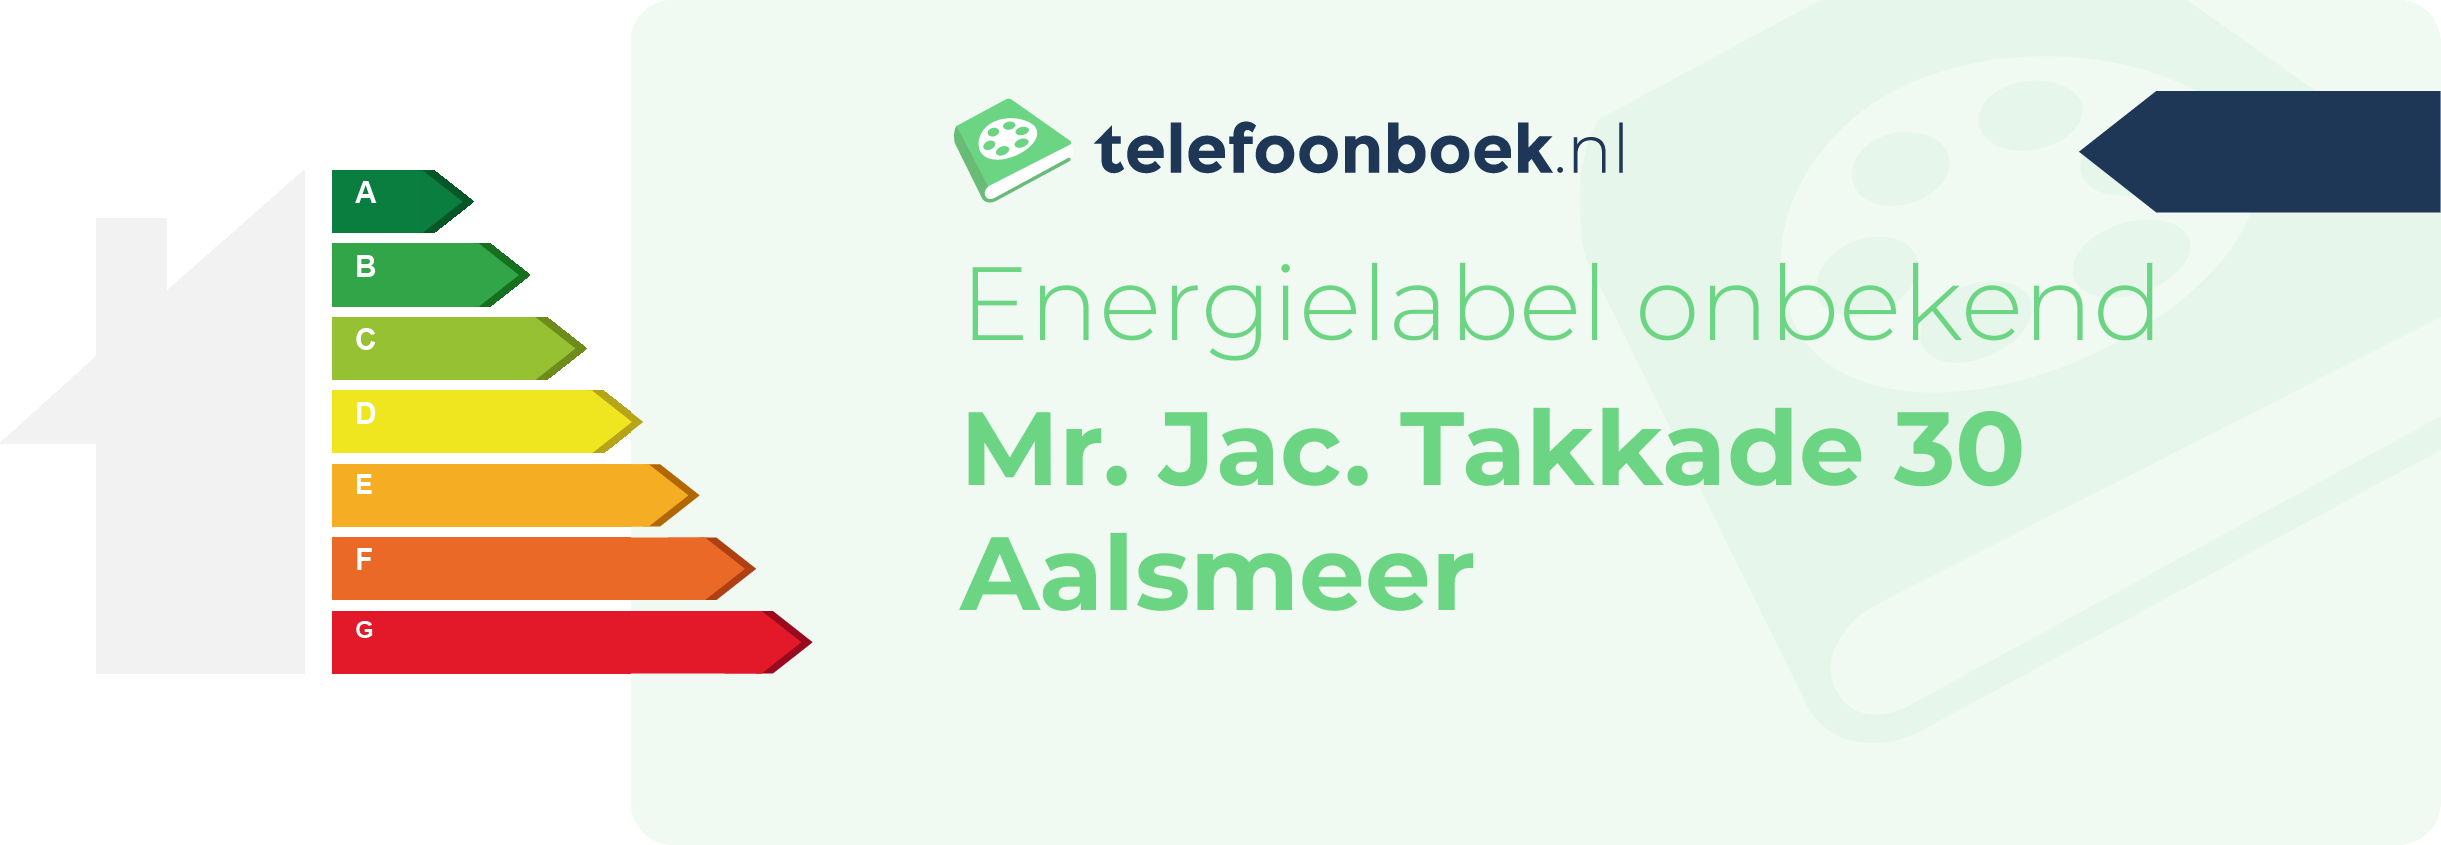 Energielabel Mr. Jac. Takkade 30 Aalsmeer